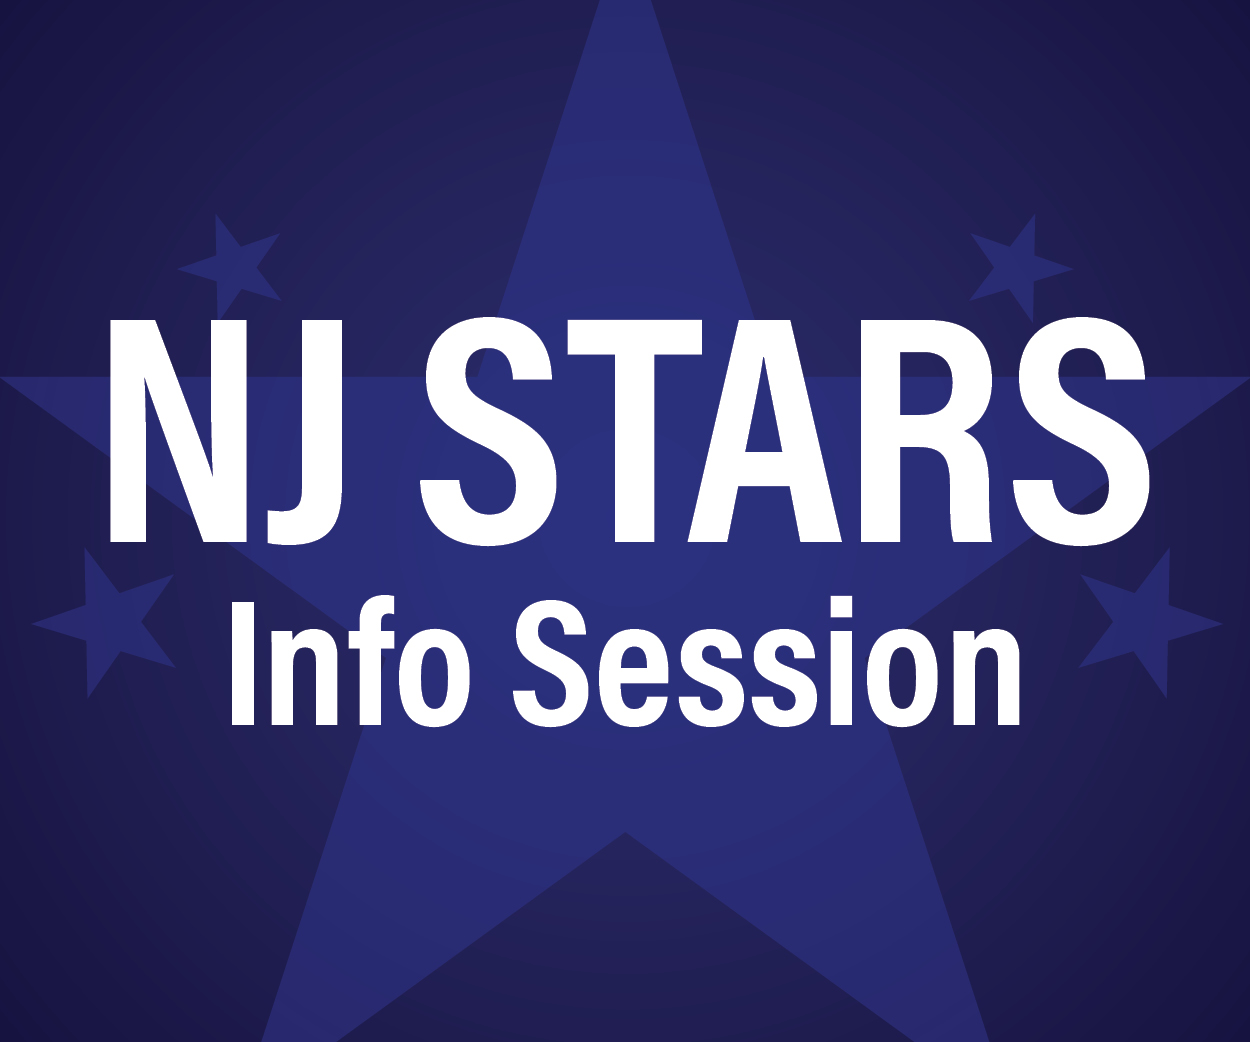 NJ stars info session